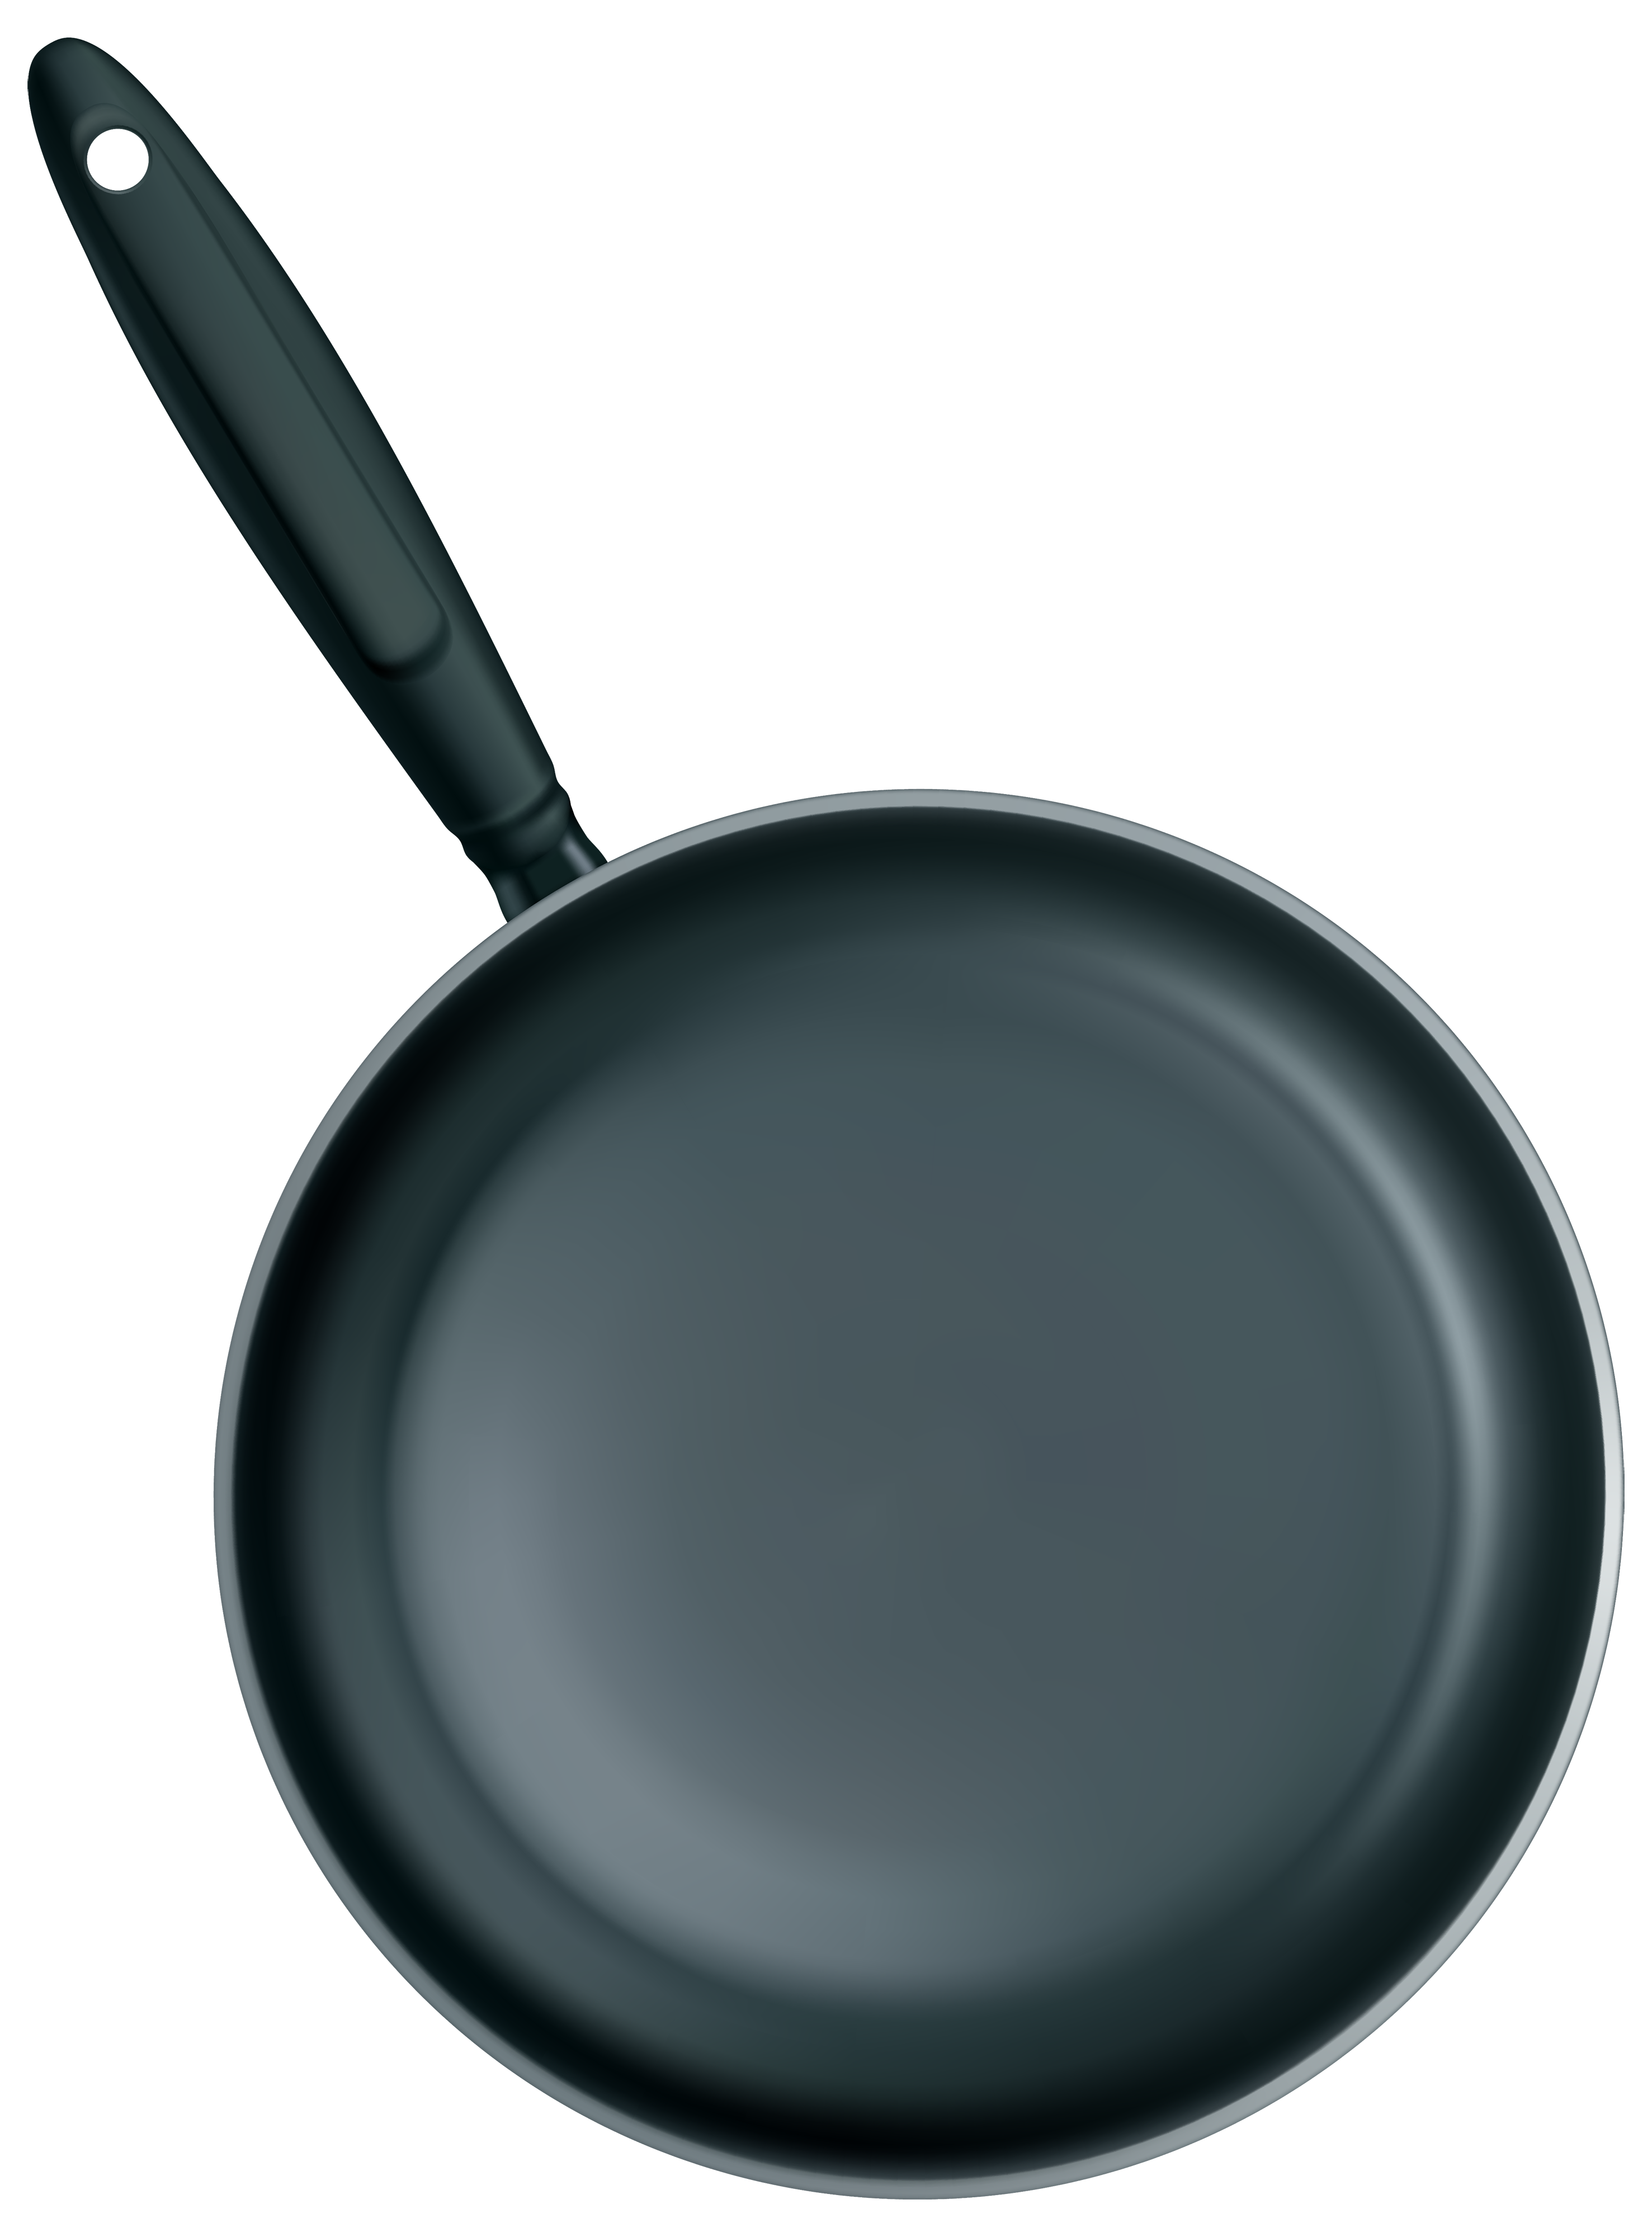 Frying Pan PNG - 8852